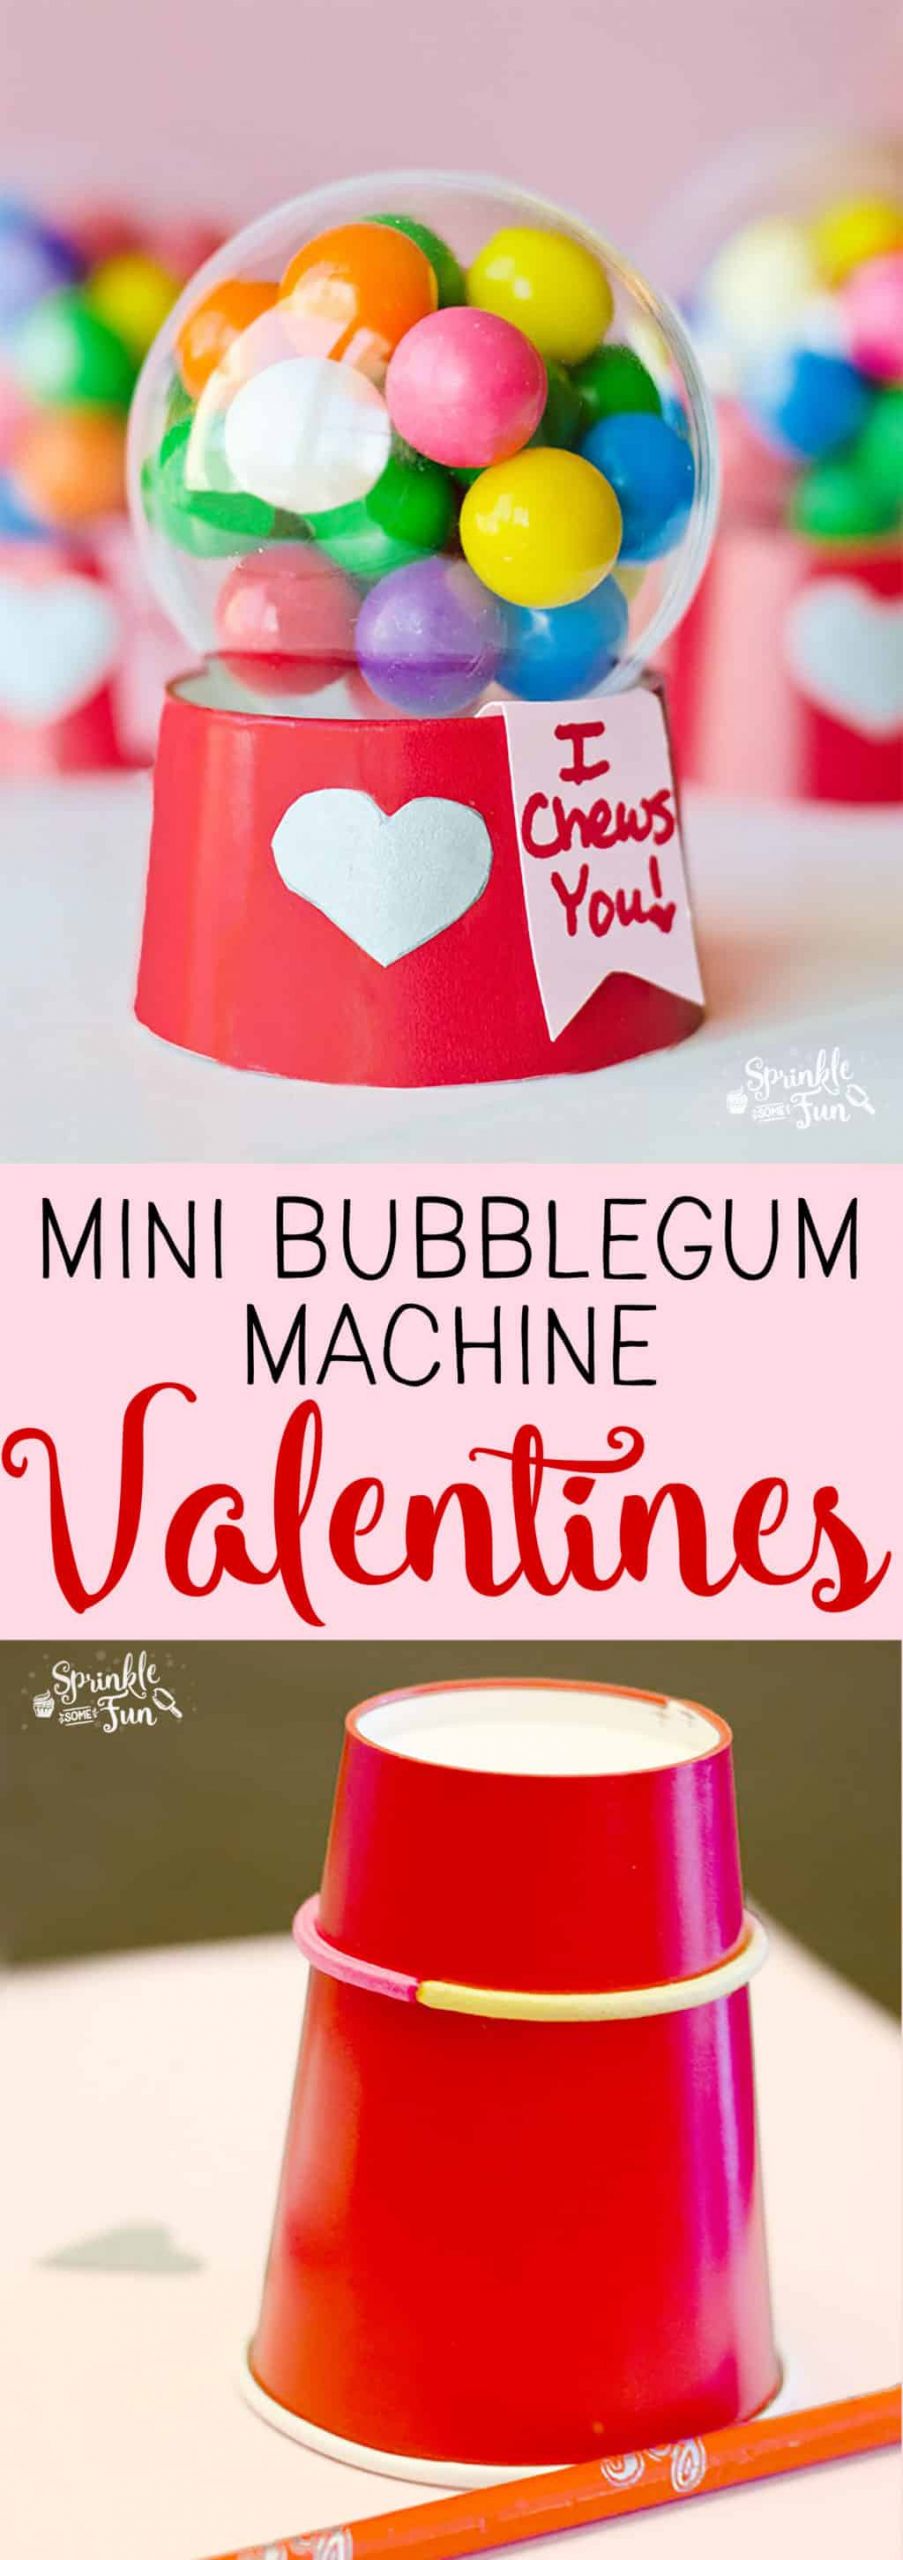 Valentines Gift For Children
 Mini Bubblegum Machine Valentines